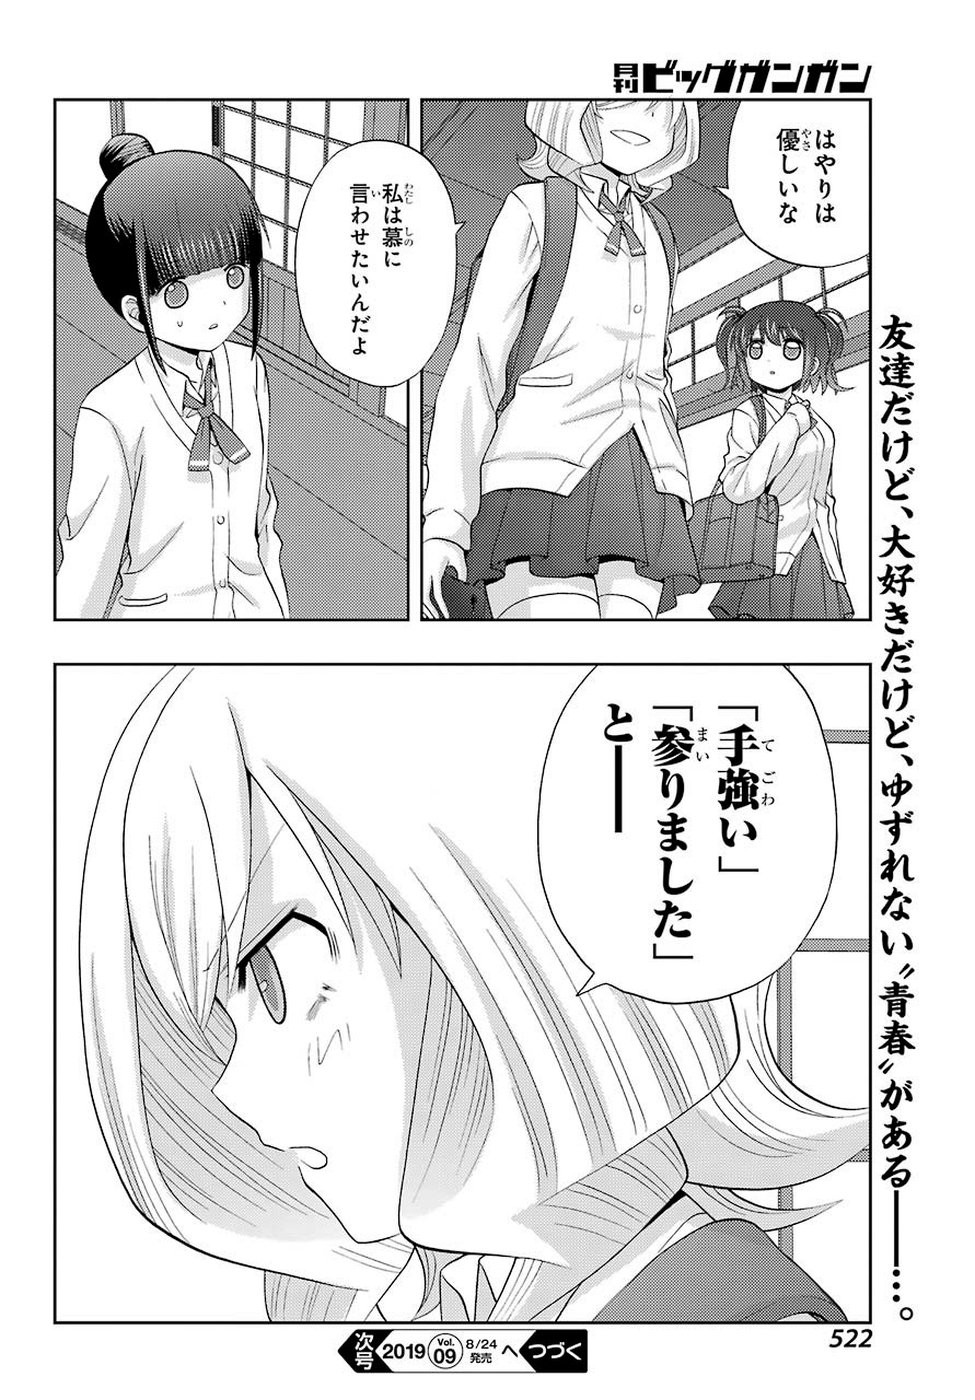 Shinohayu - The Dawn of Age Manga - Chapter 070 - Page 31